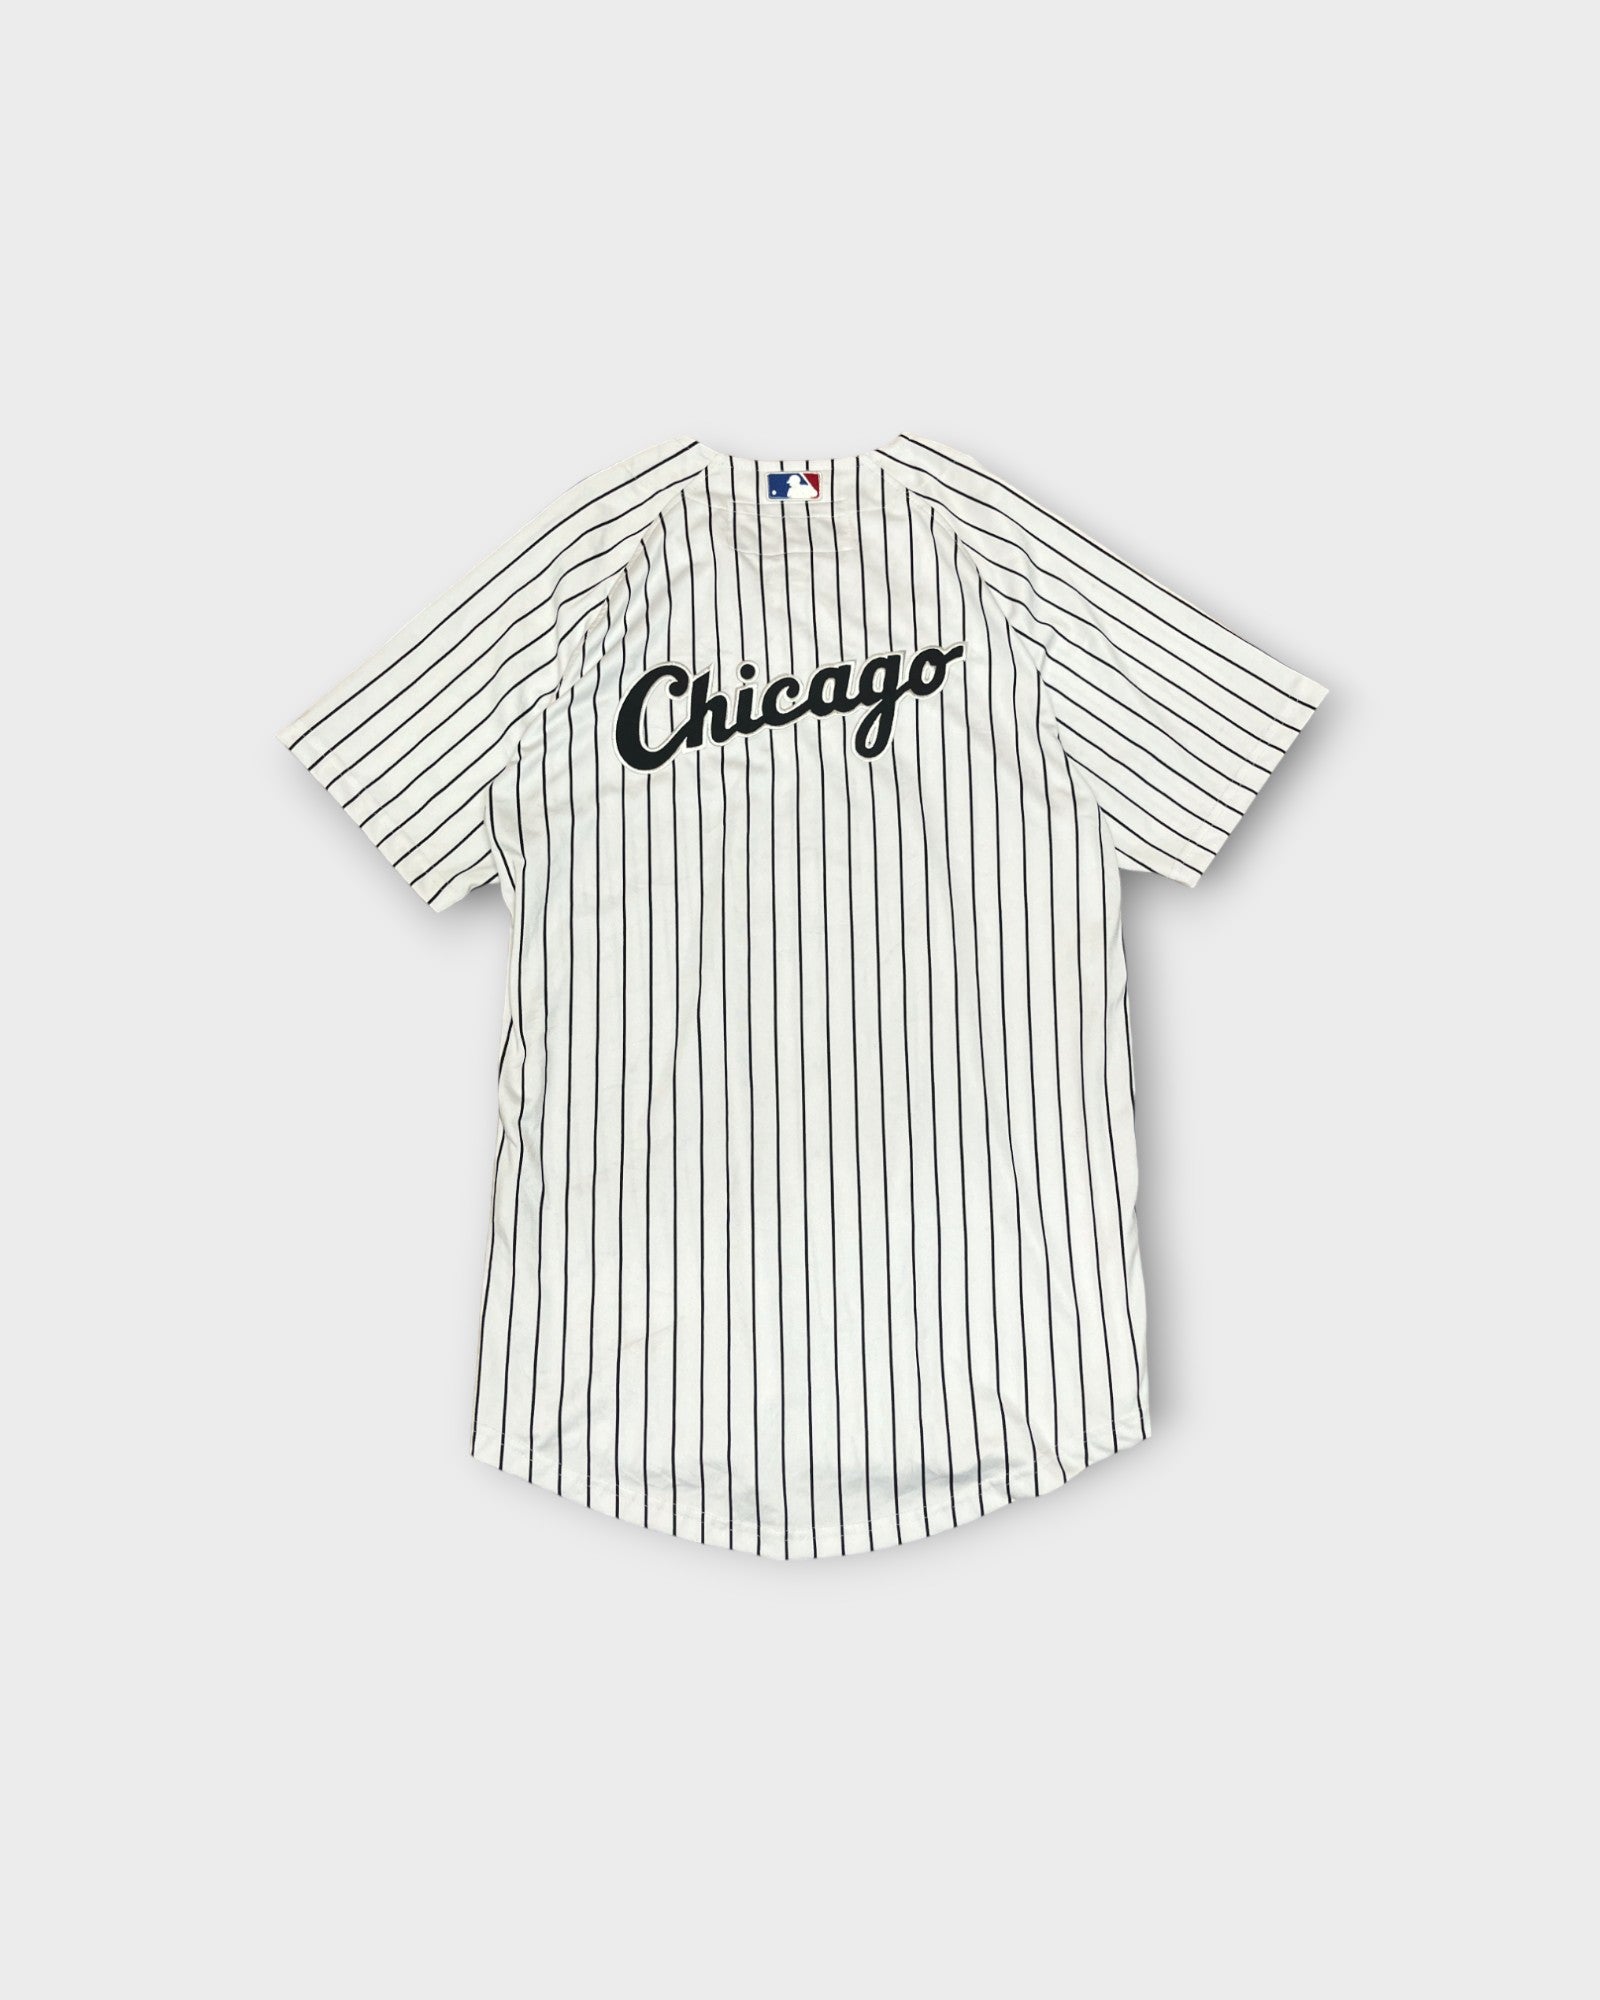 Vintage Majestic Chicago White Sox Jersey - XL